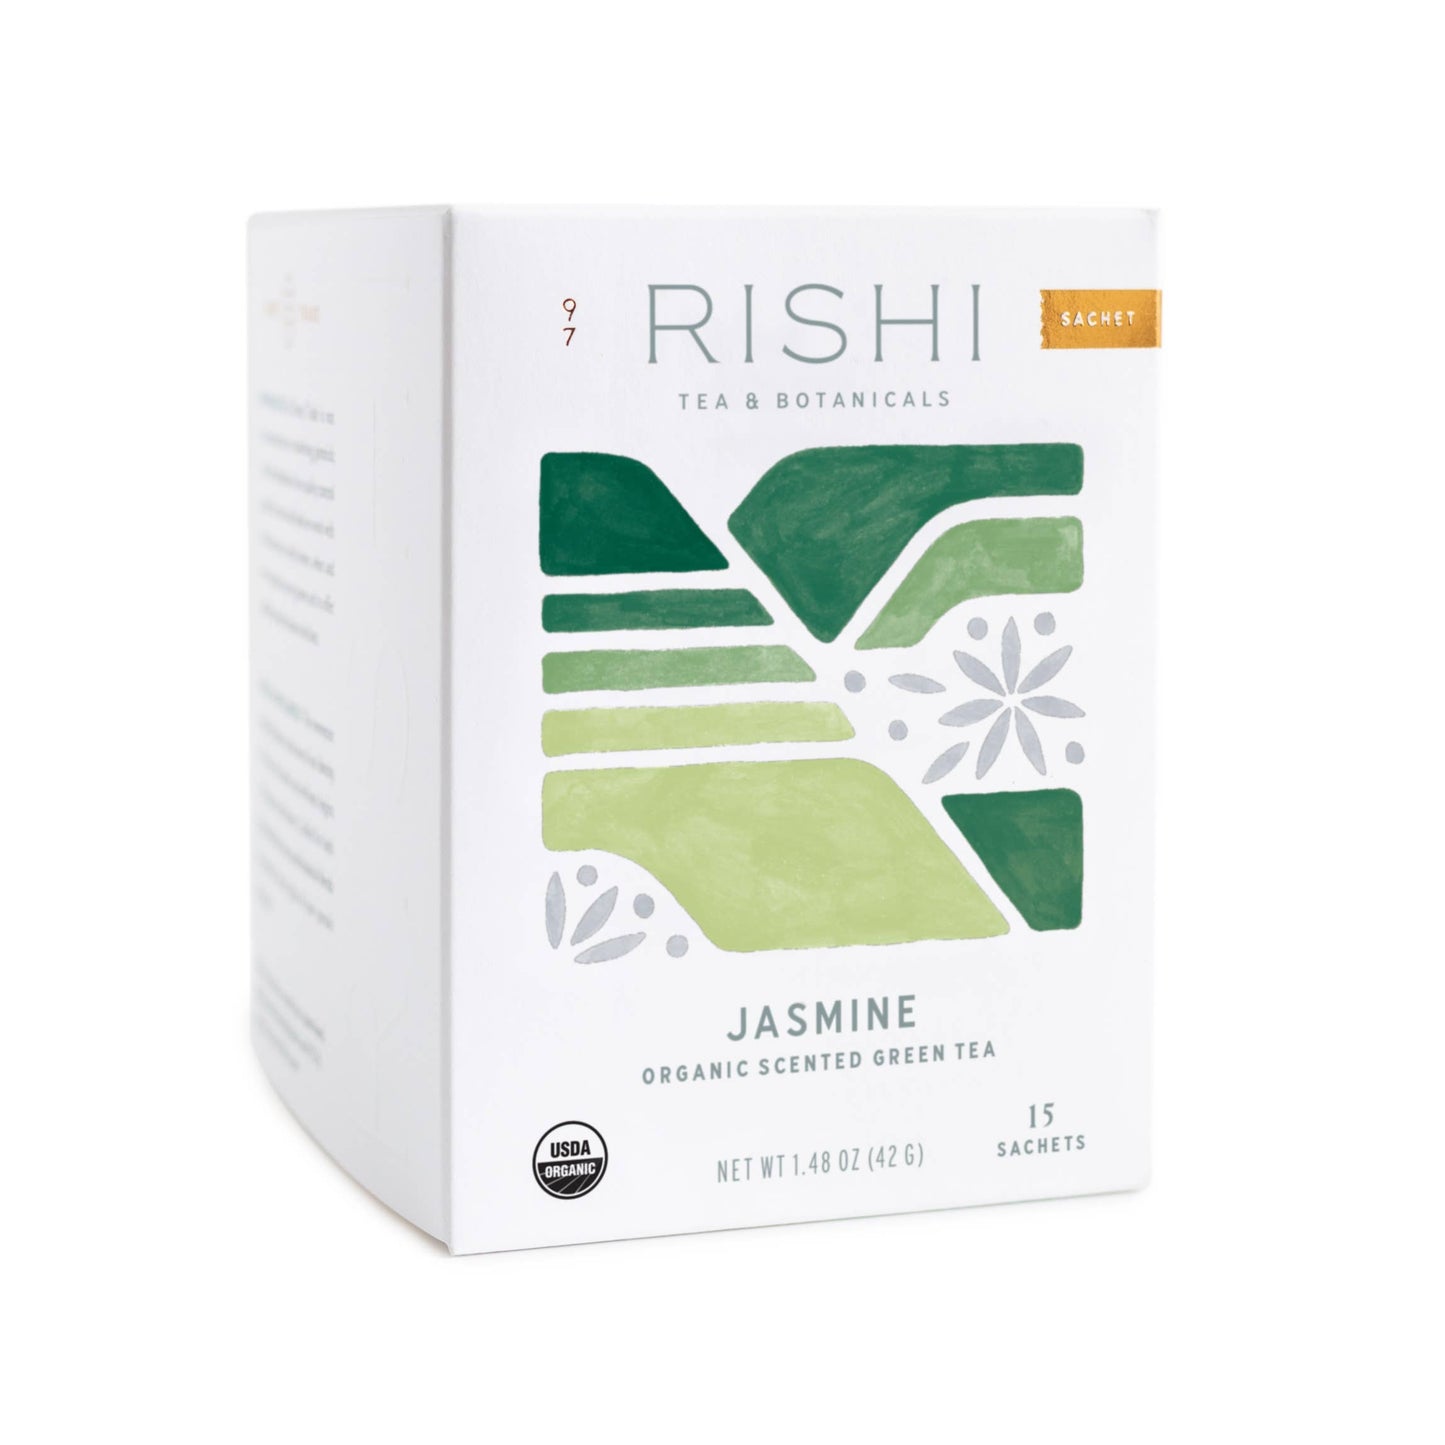 Rishi Tea & Botanicals - Jasmine Organic Green Tea Sachets